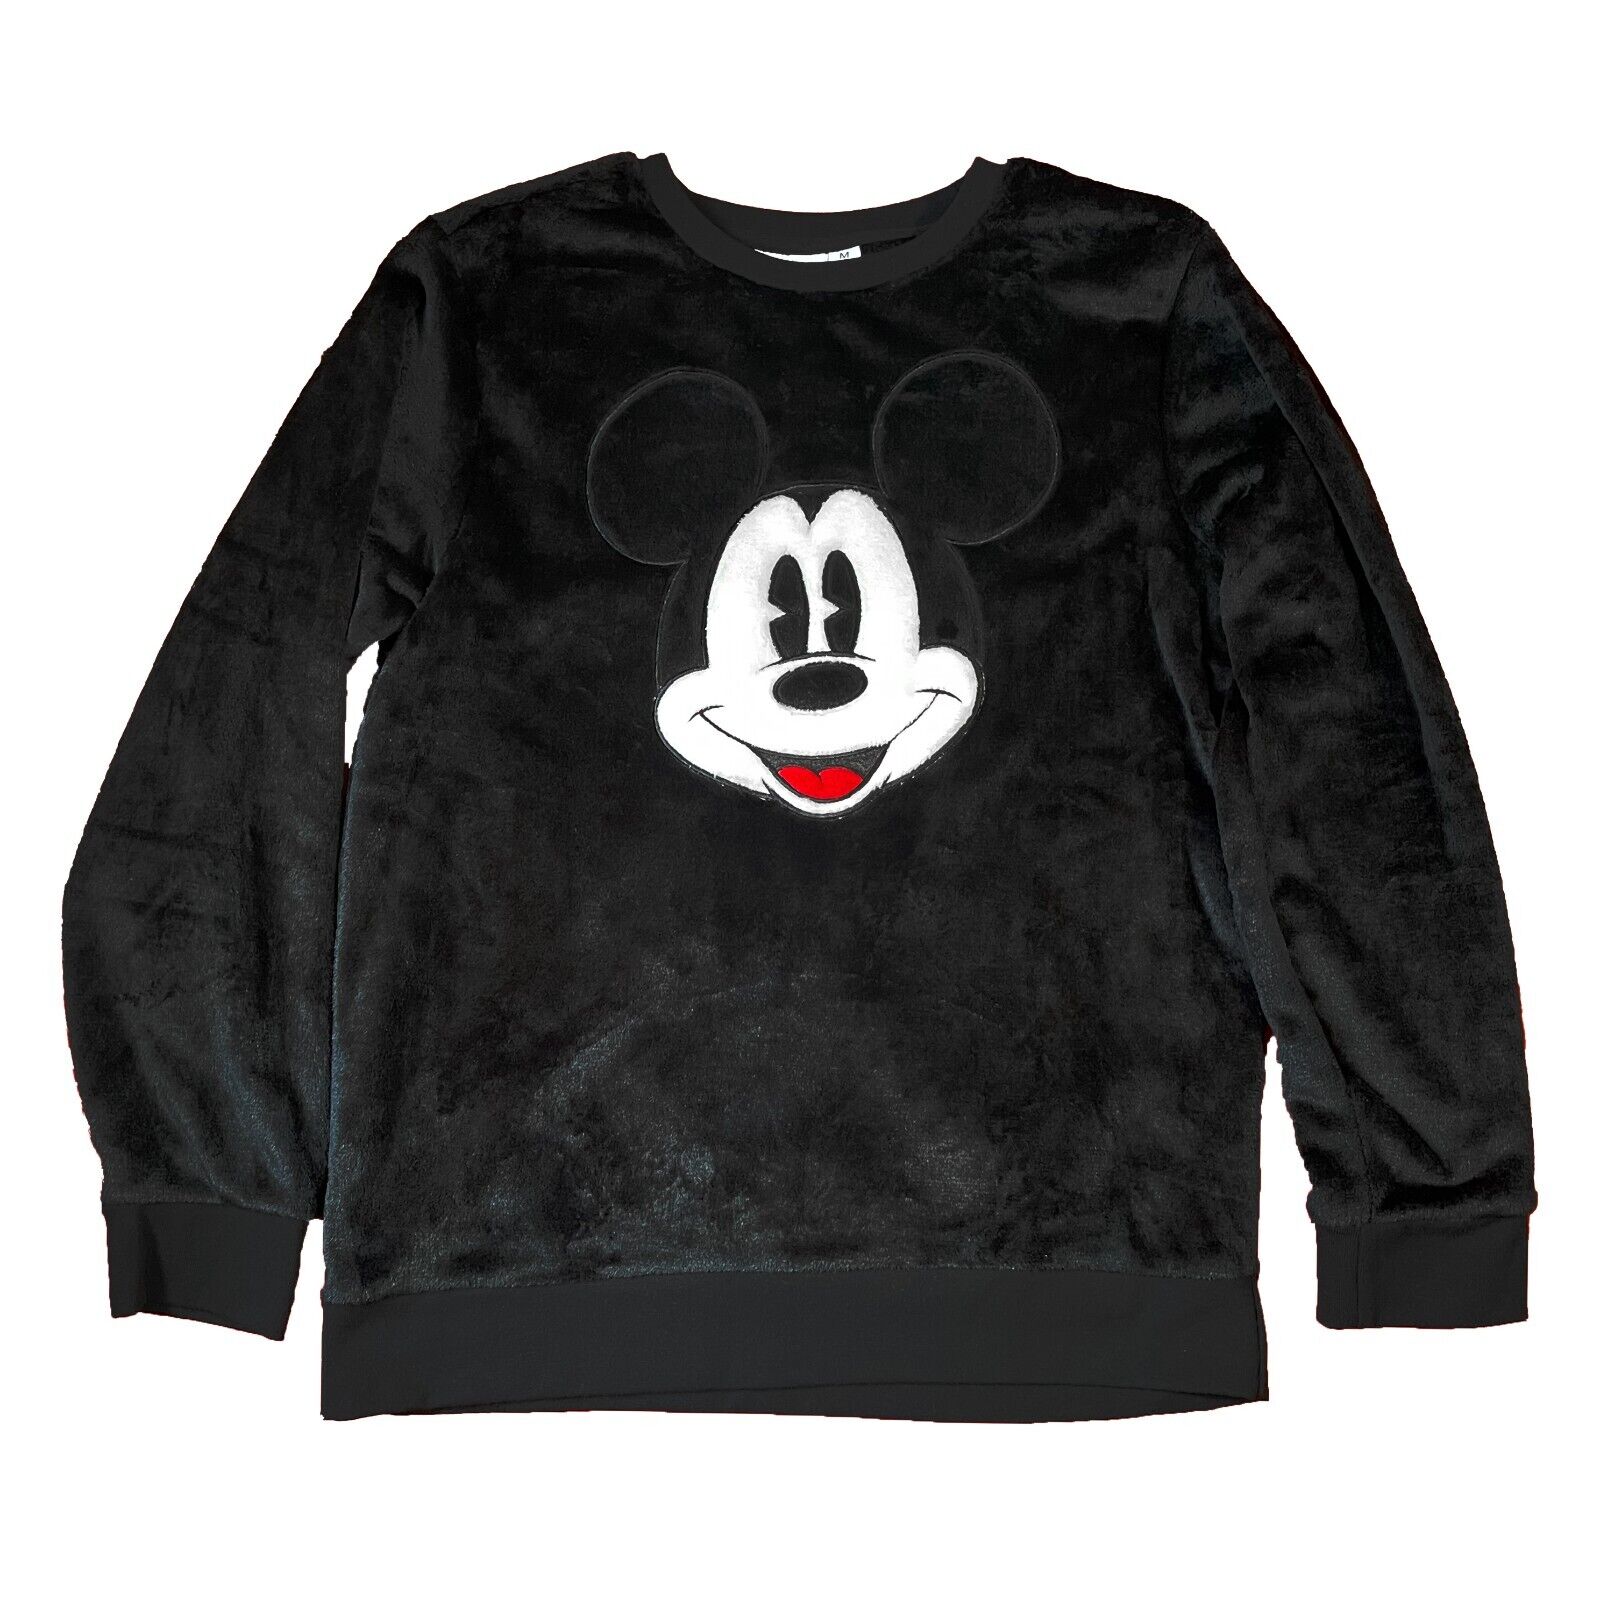 NWOT Disney Parks Velour Plush Fleece Mickey Mouse Pullover Sweatshirt - M Black